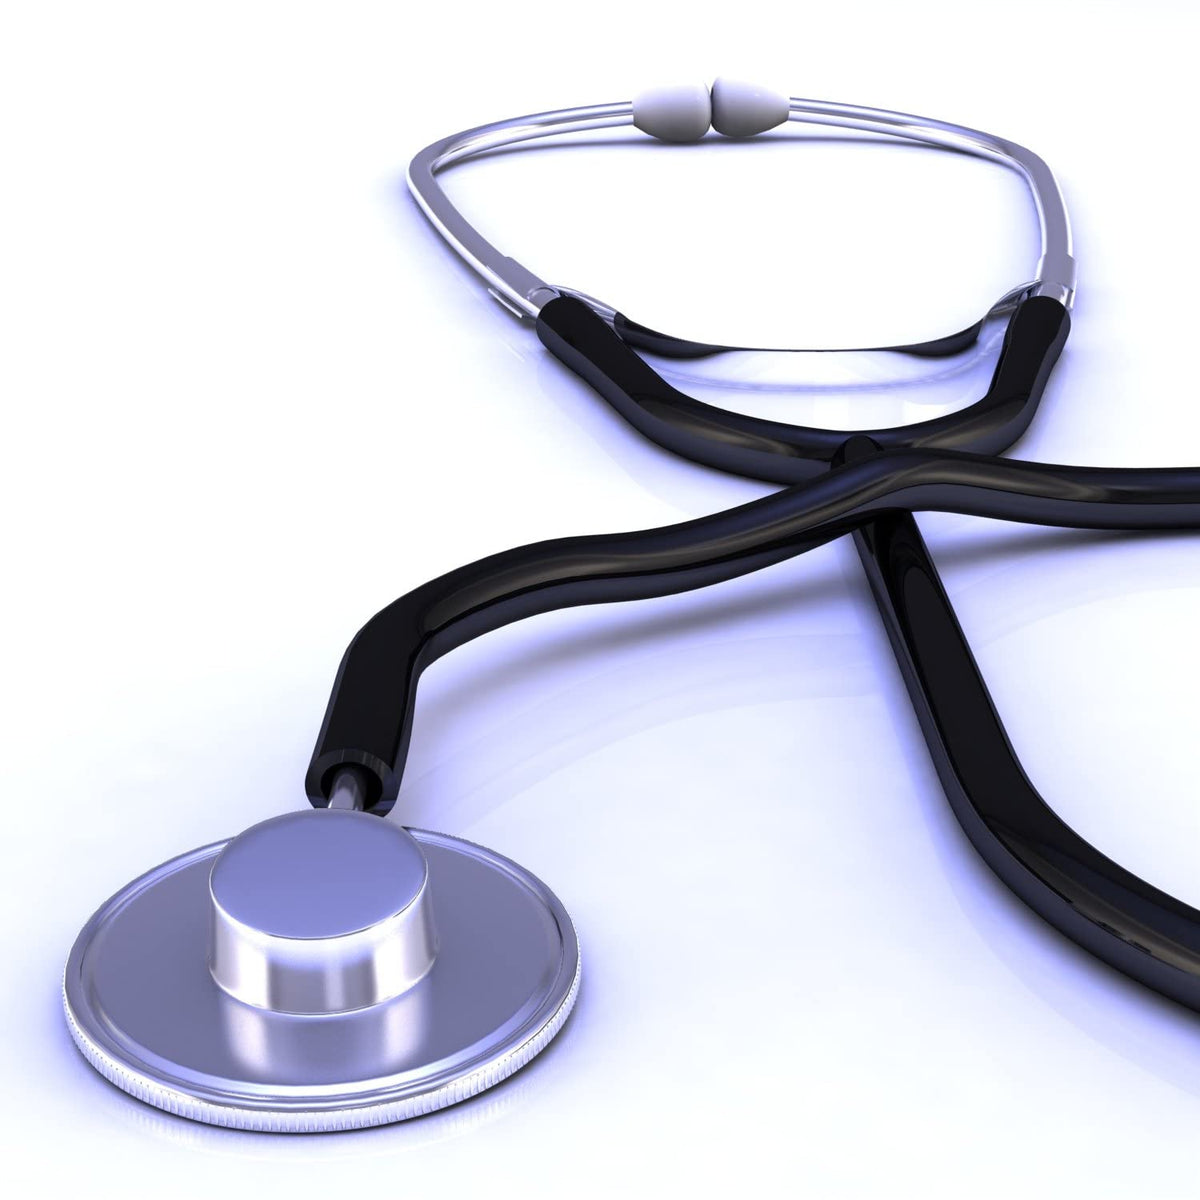 Single Sided Black Medical Doctor Stethoscope, Rubber, for Hospital